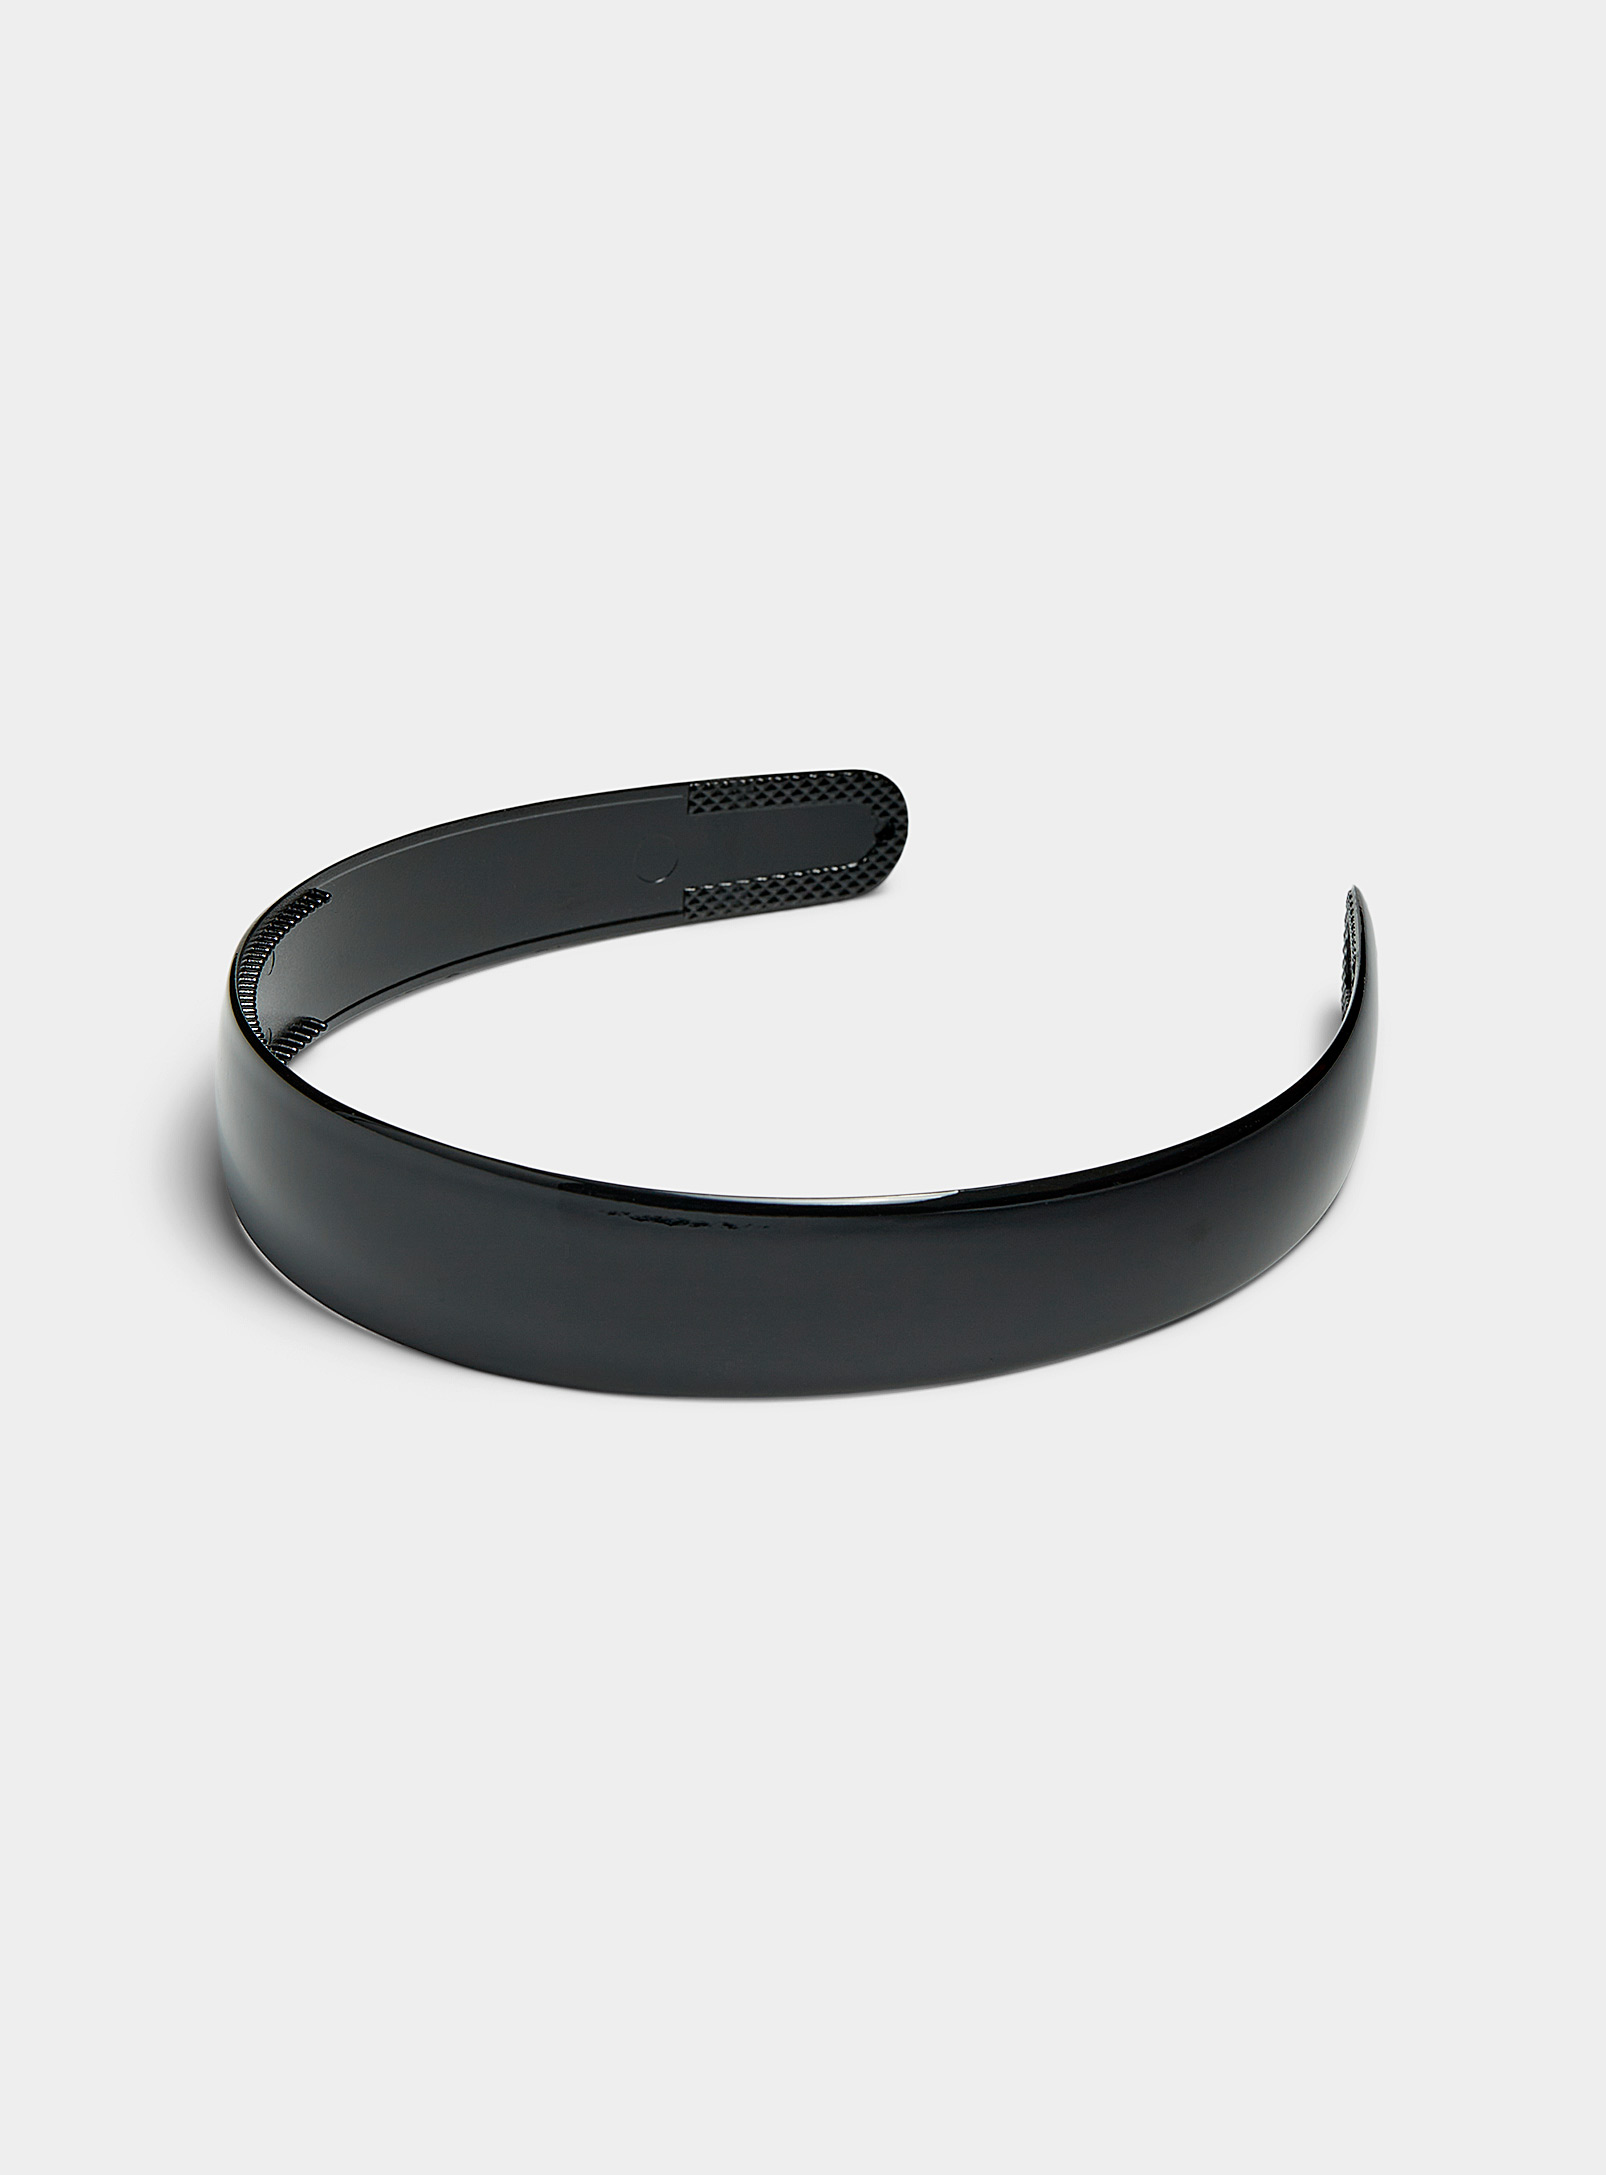 Simons - Women's Shiny plastic headband